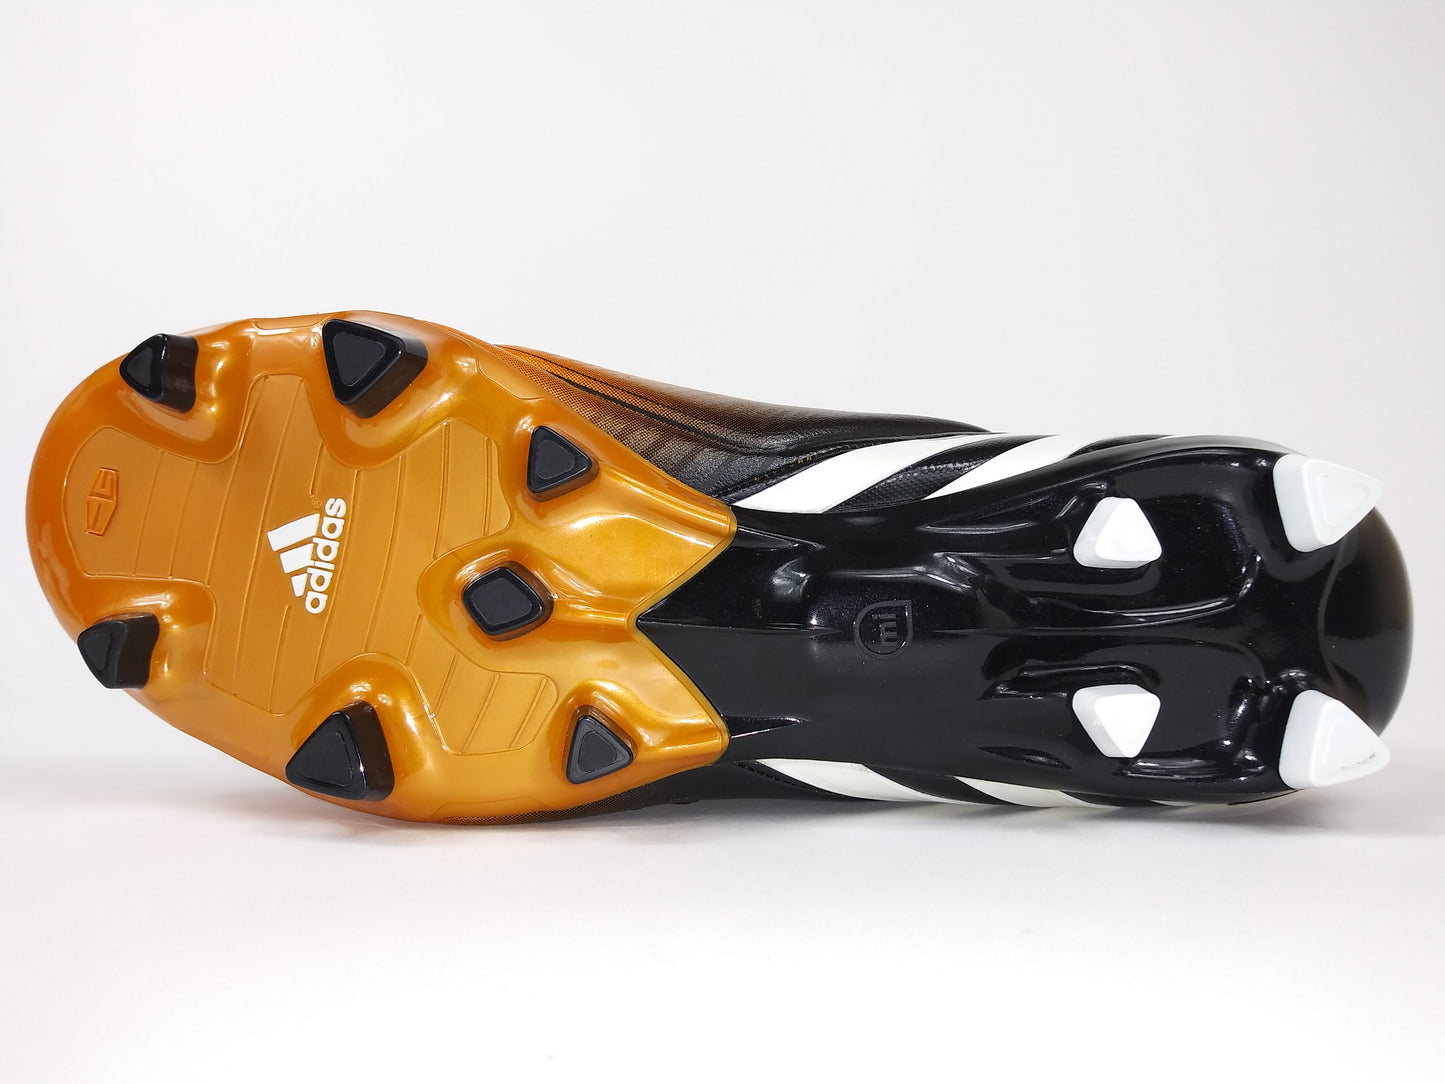 Adidas Predator LZ TRX FG Orange Black